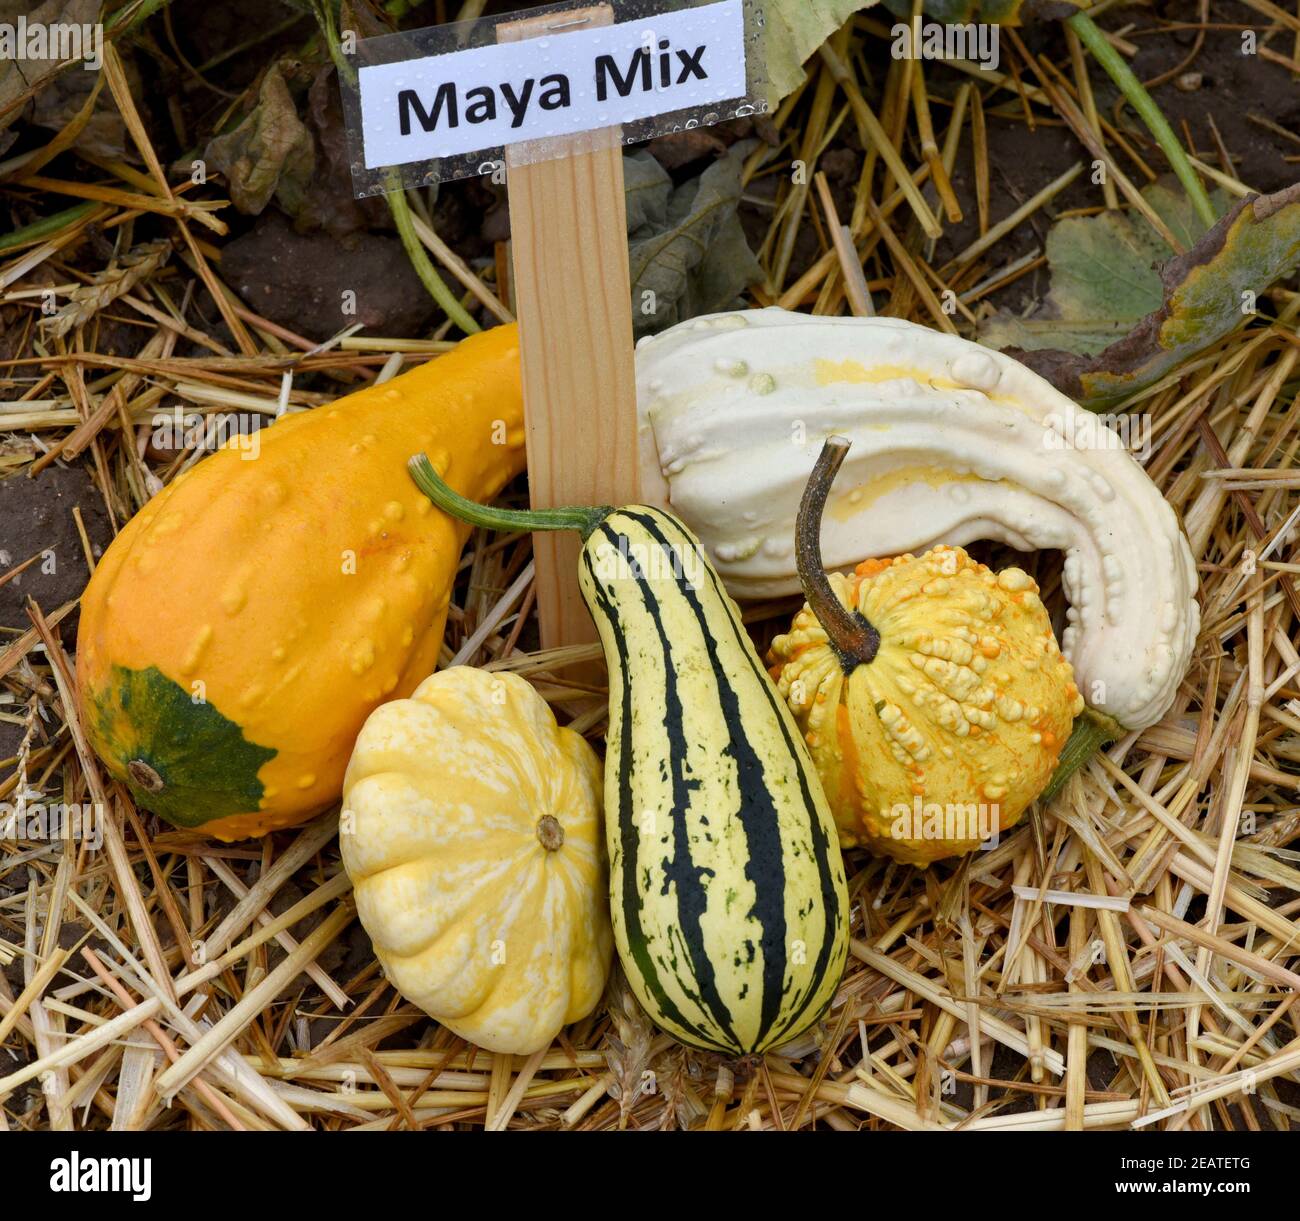 Maya Mix, Zierkuerbis, Kuerbis Foto Stock